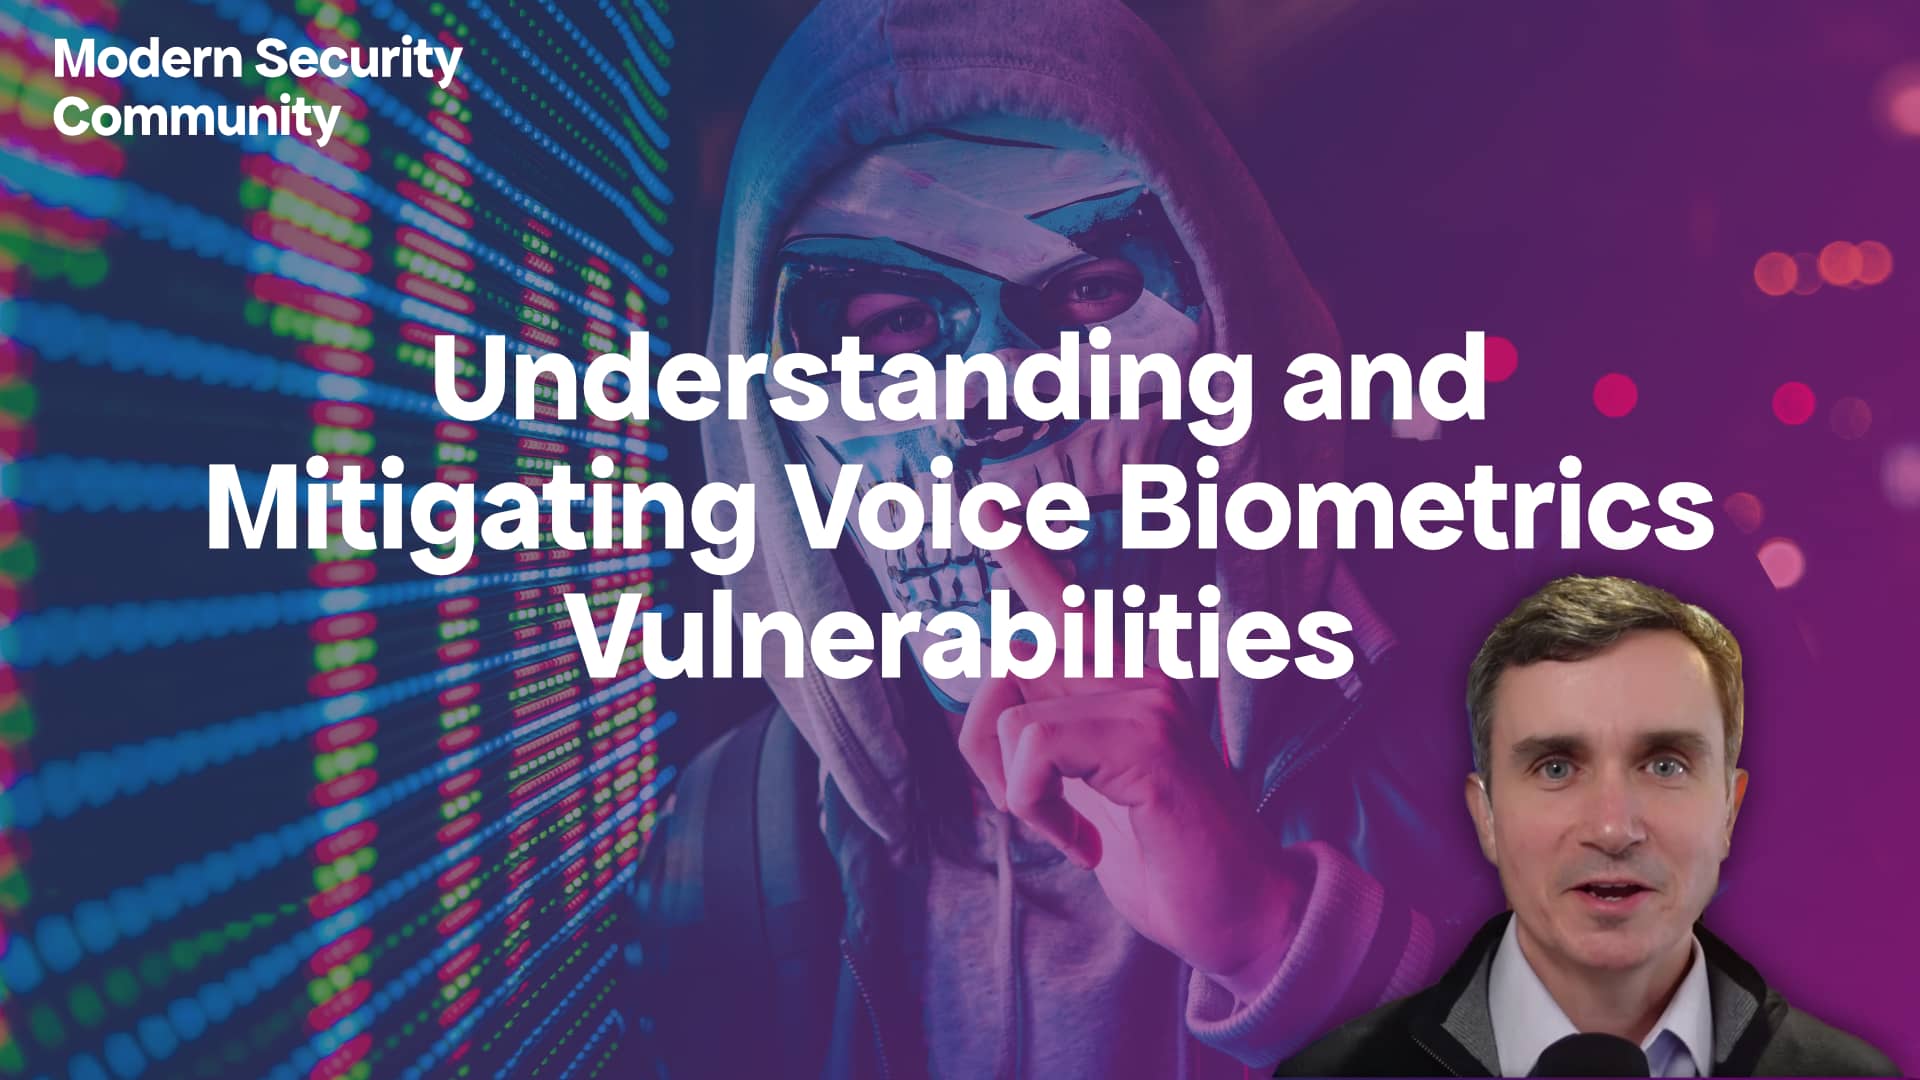 Thumbnail for Understanding and Mitigating Voice Biometrics Vulnerabilities Video